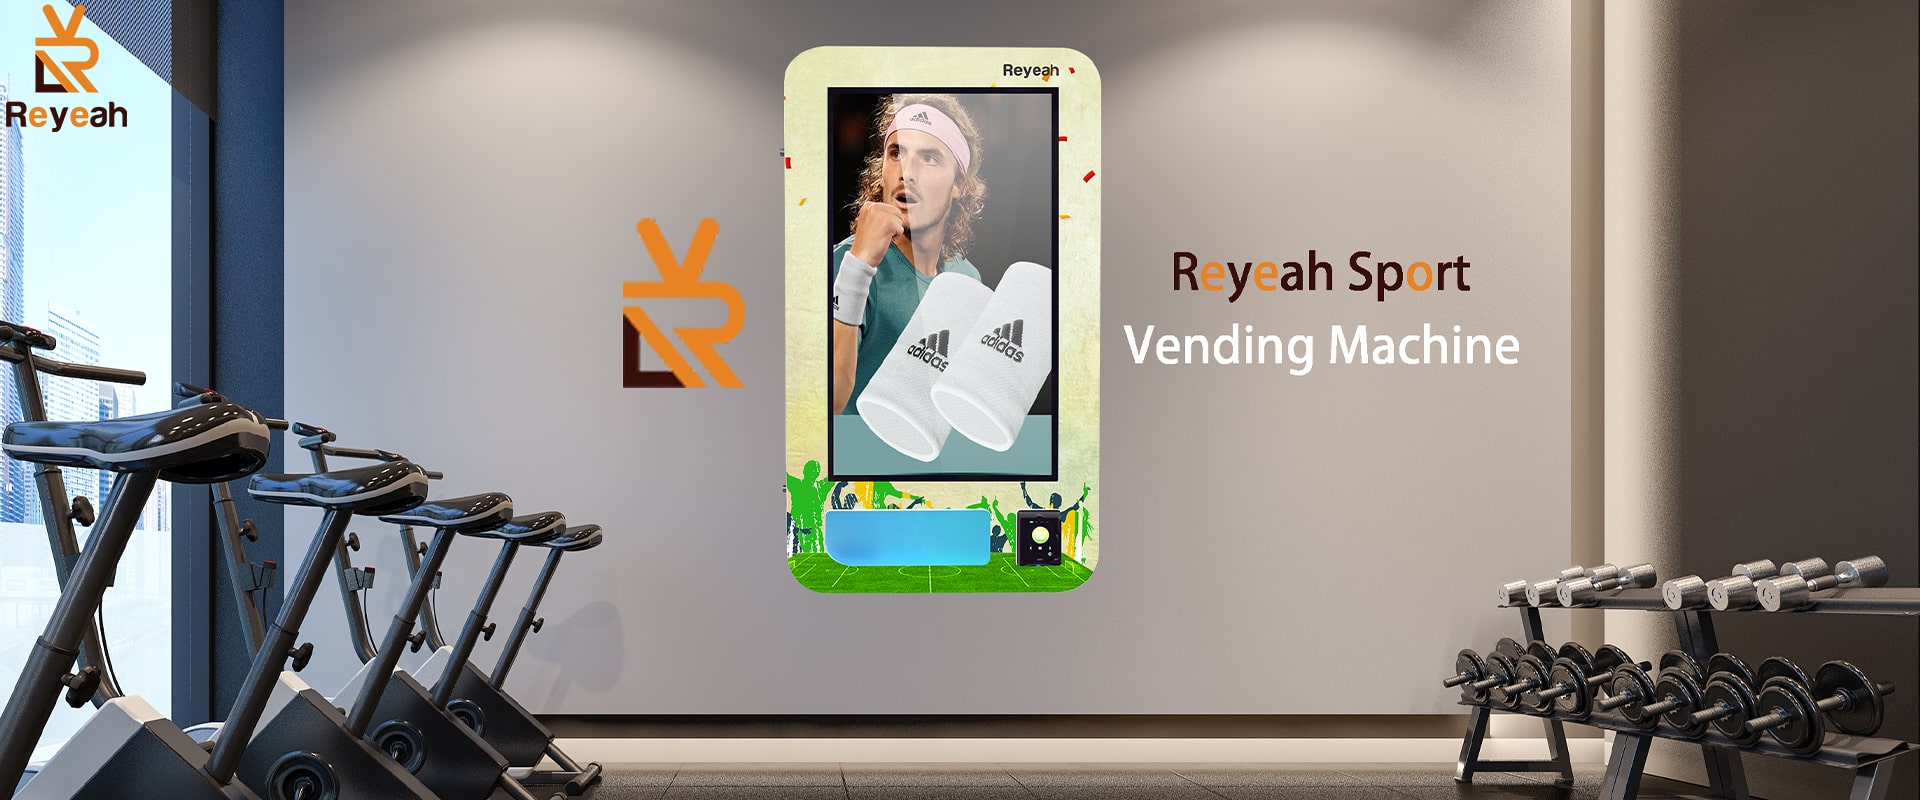 Reyeah G02 - Wall Mounted Sport Vending Machine